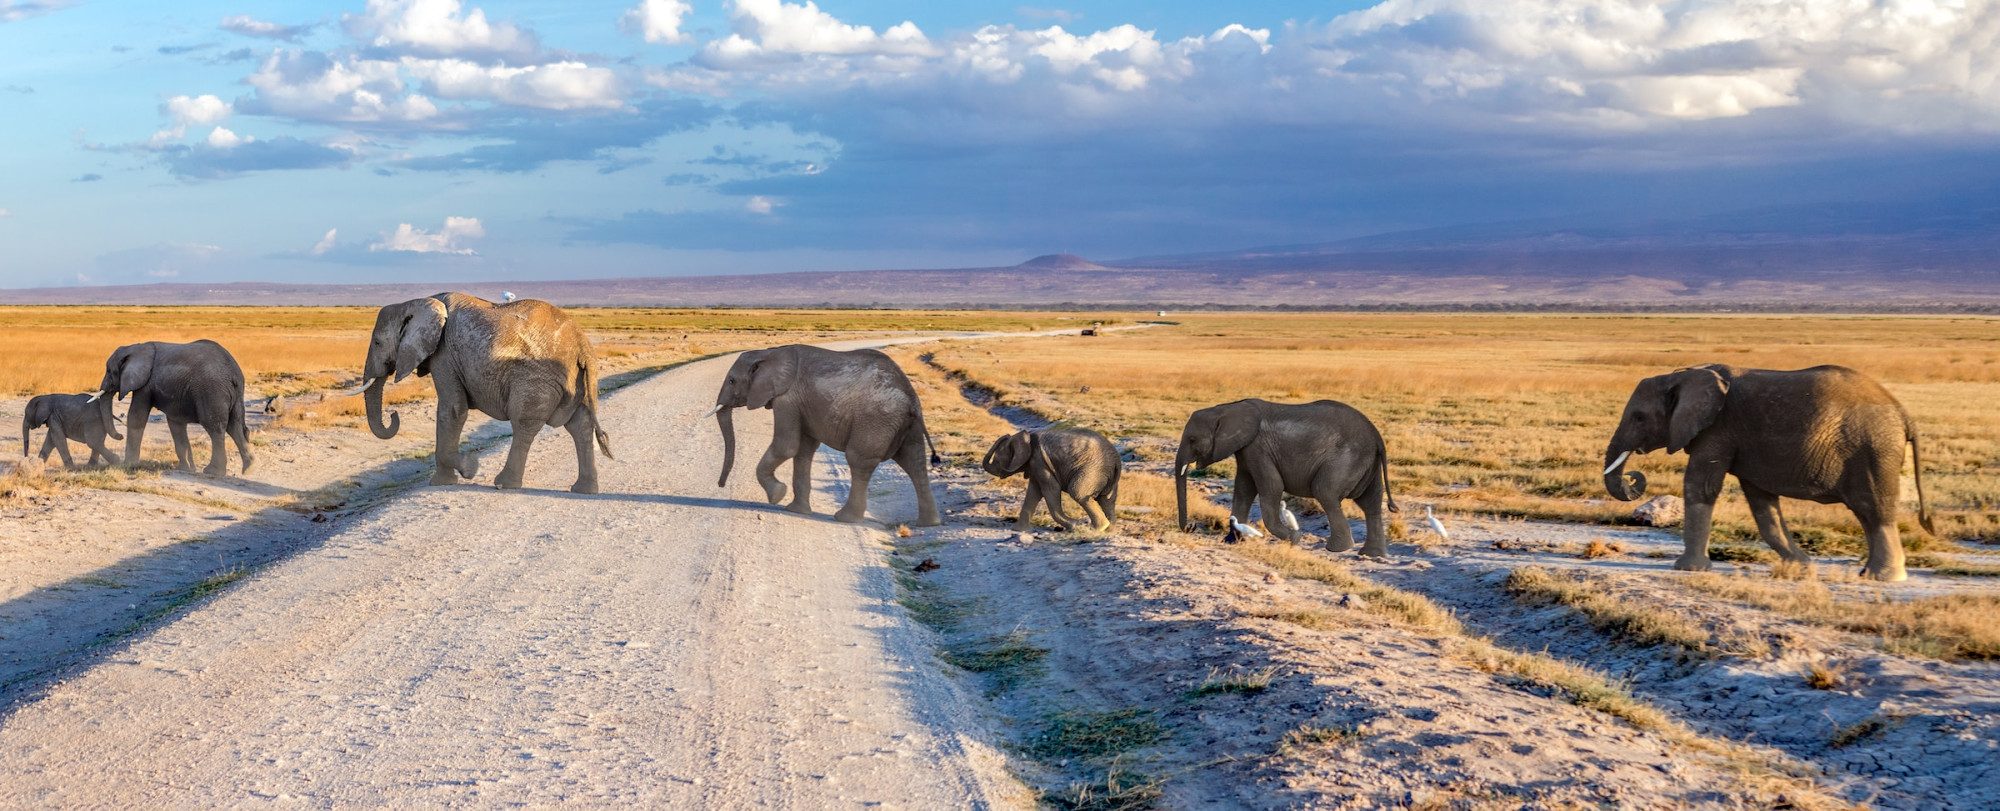 Amboseli, Kenya olifanten familie